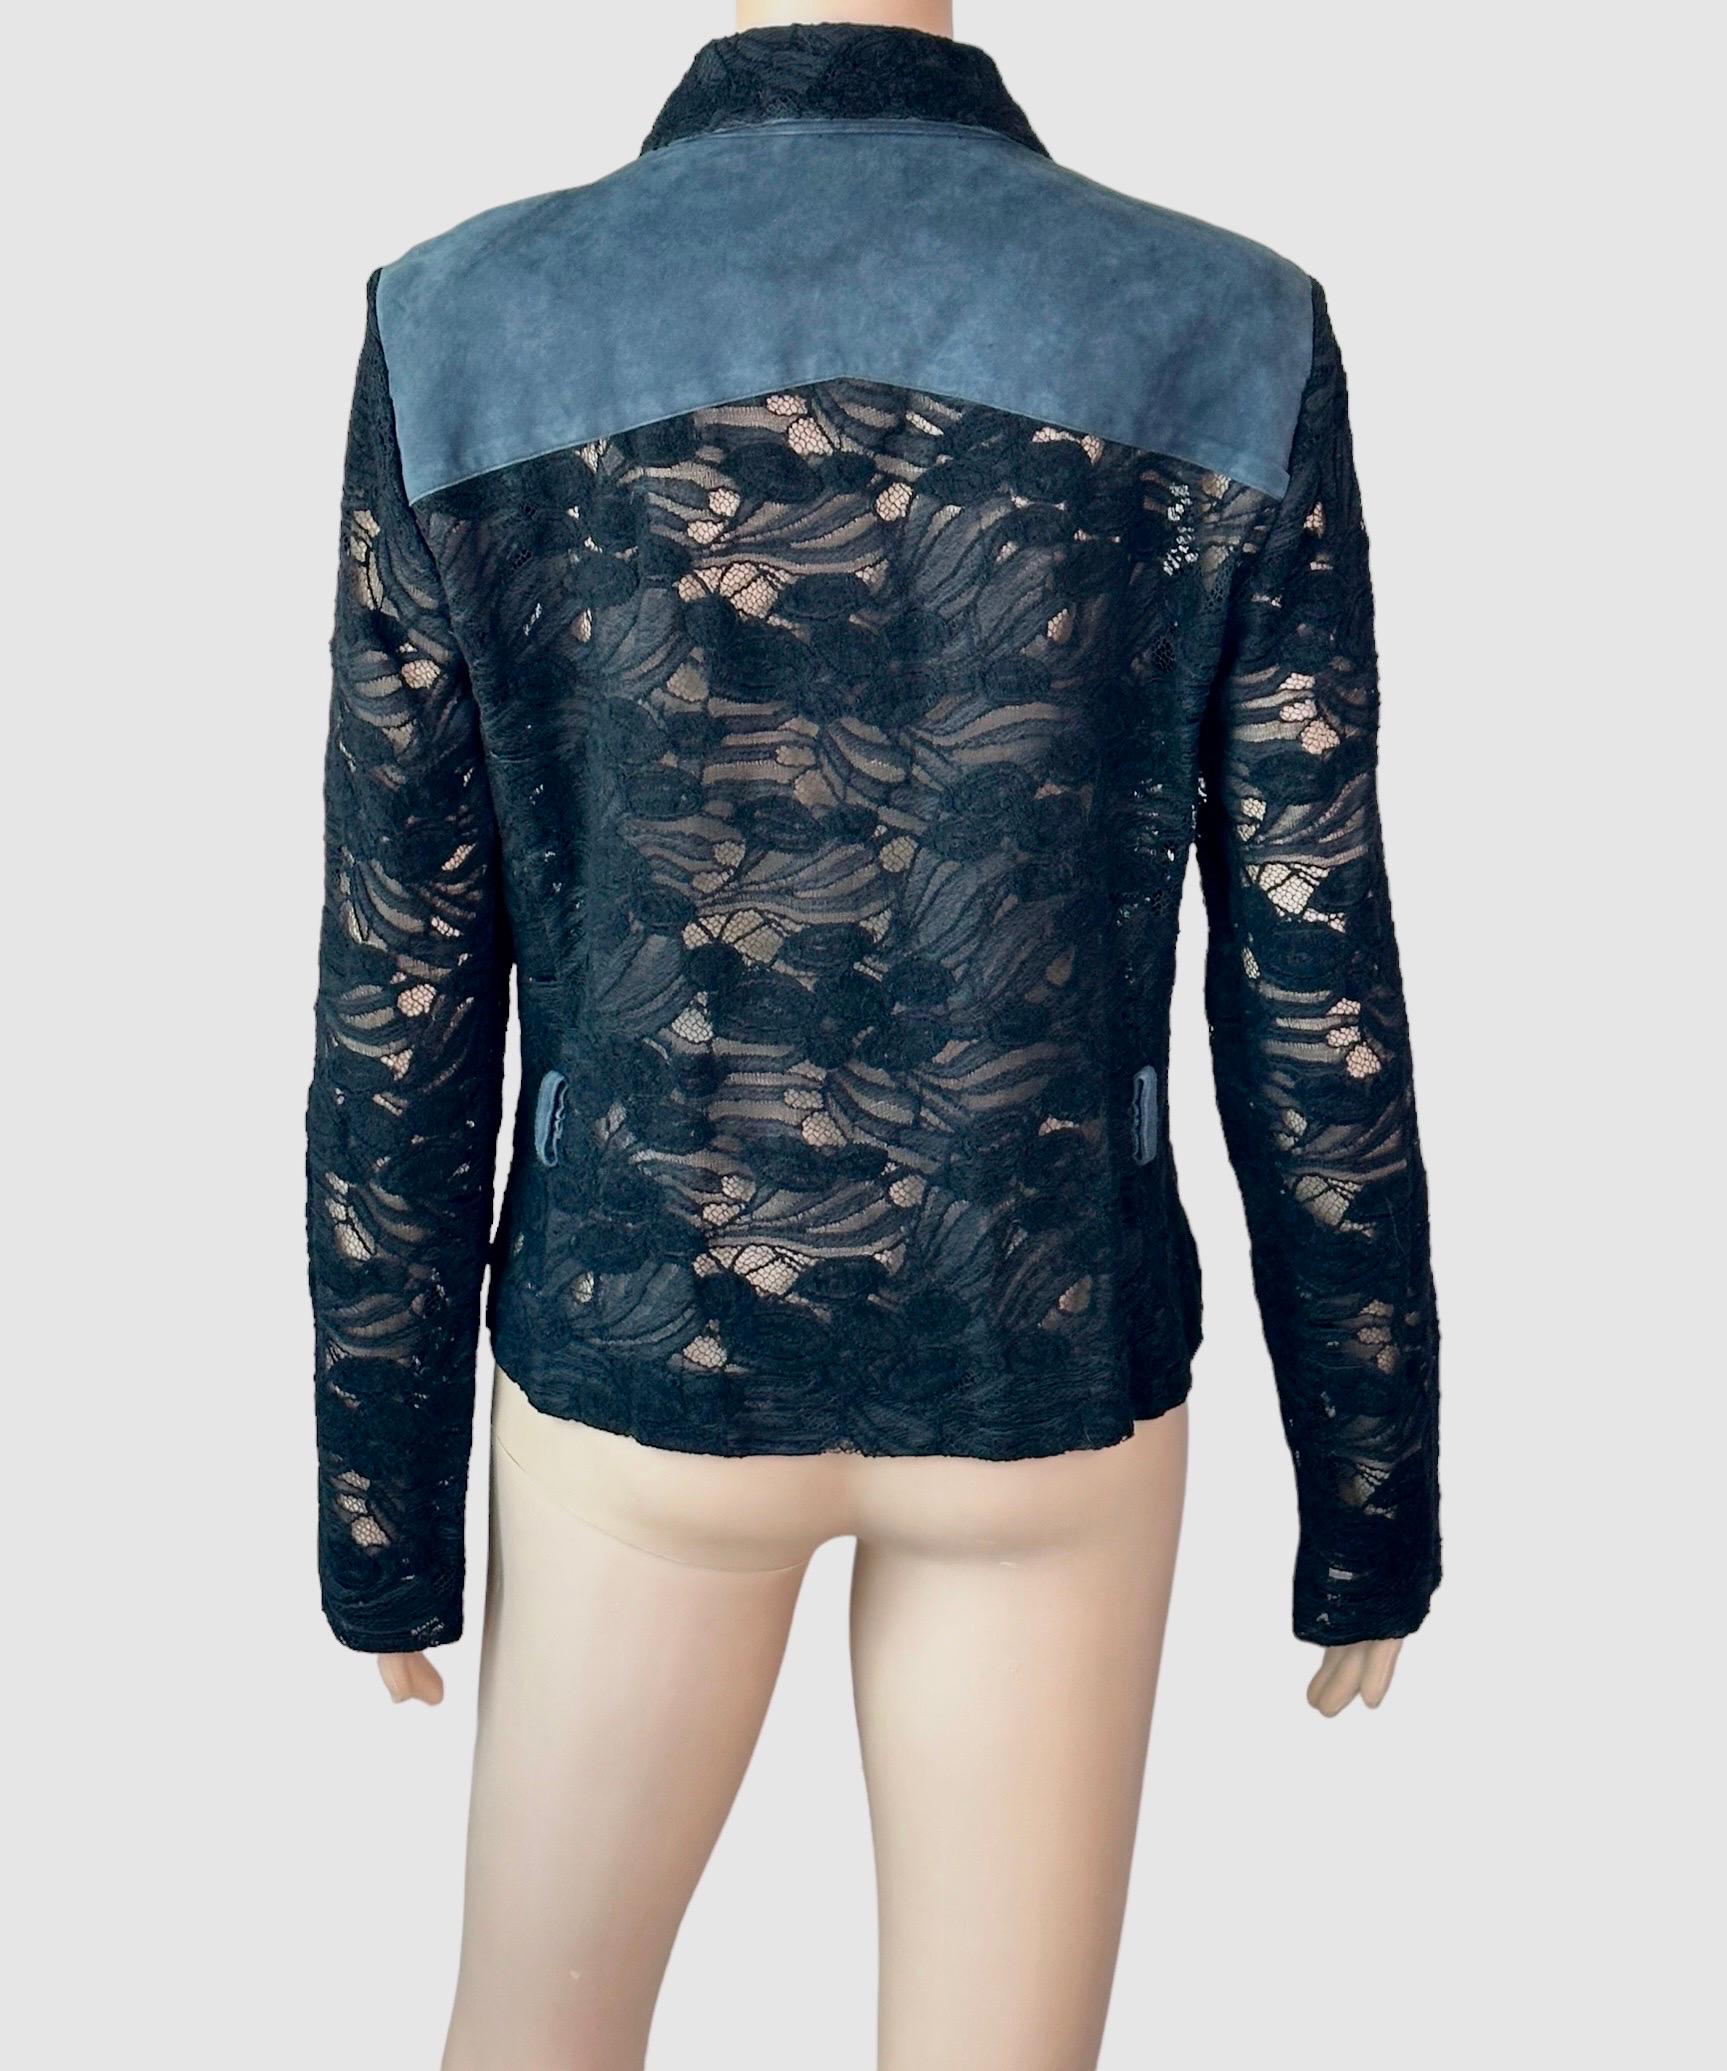 Gianni Versace c.2001 Vintage Lace Sheer Black Shirt Top Jacket

